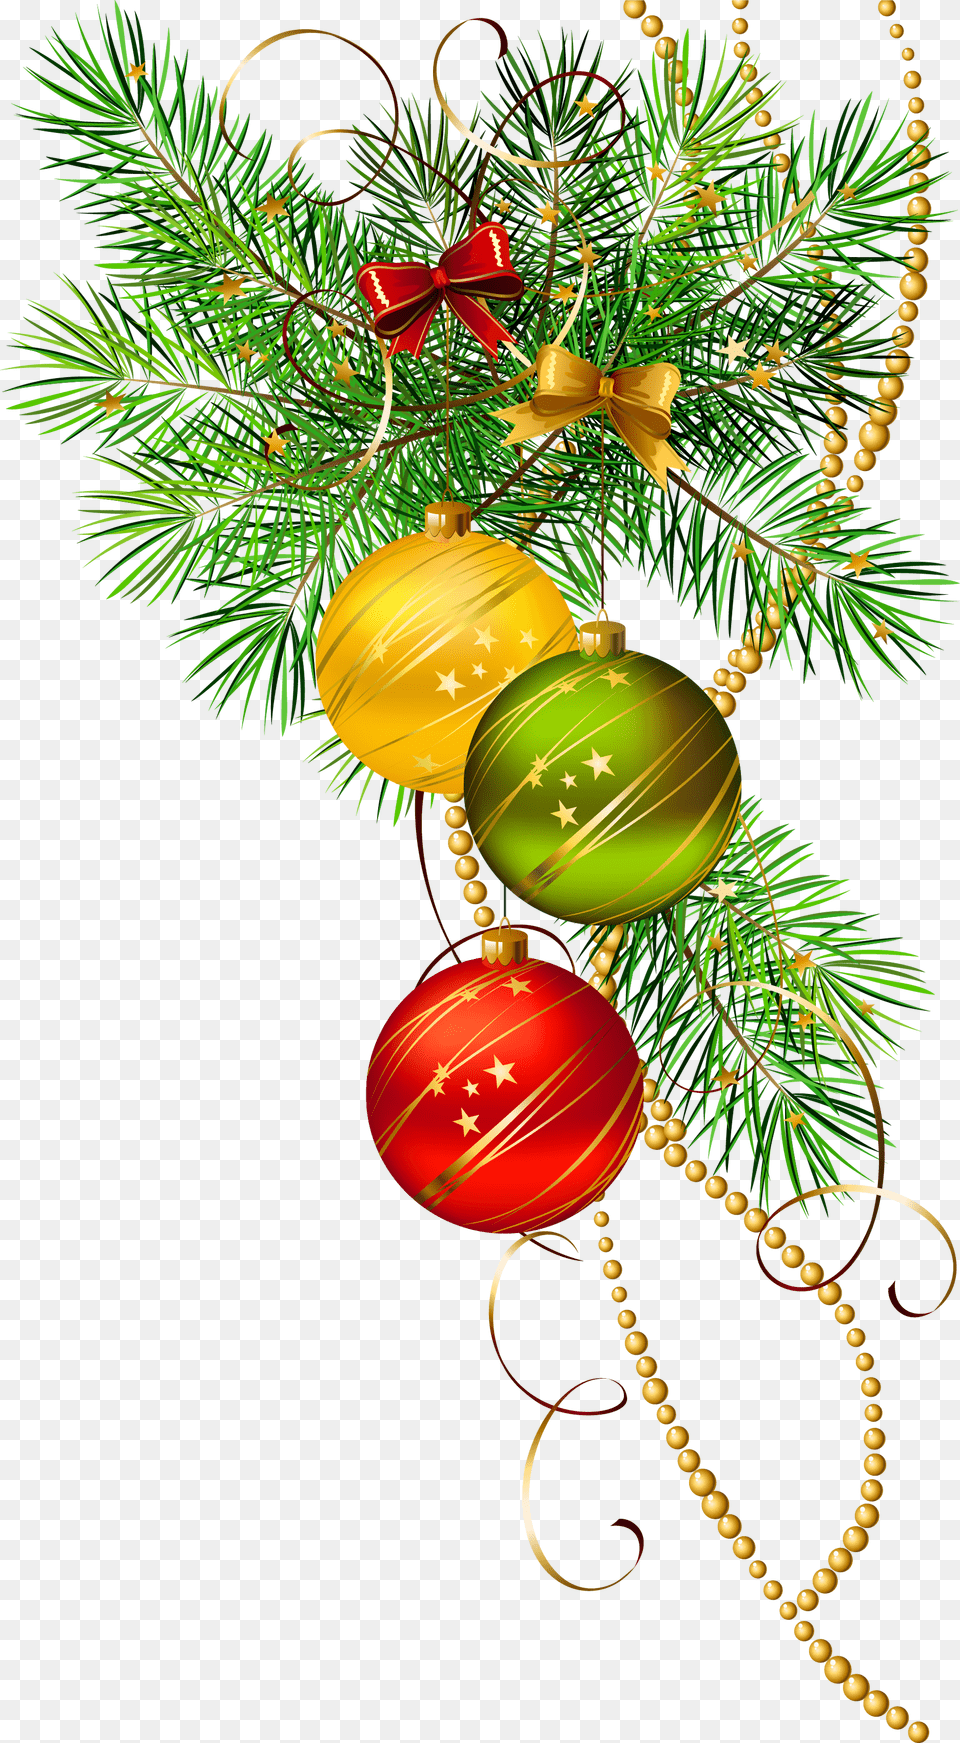 Transparent Pine Clipart Christmas Decor Vector, Accessories, Plant, Tree, Ornament Png